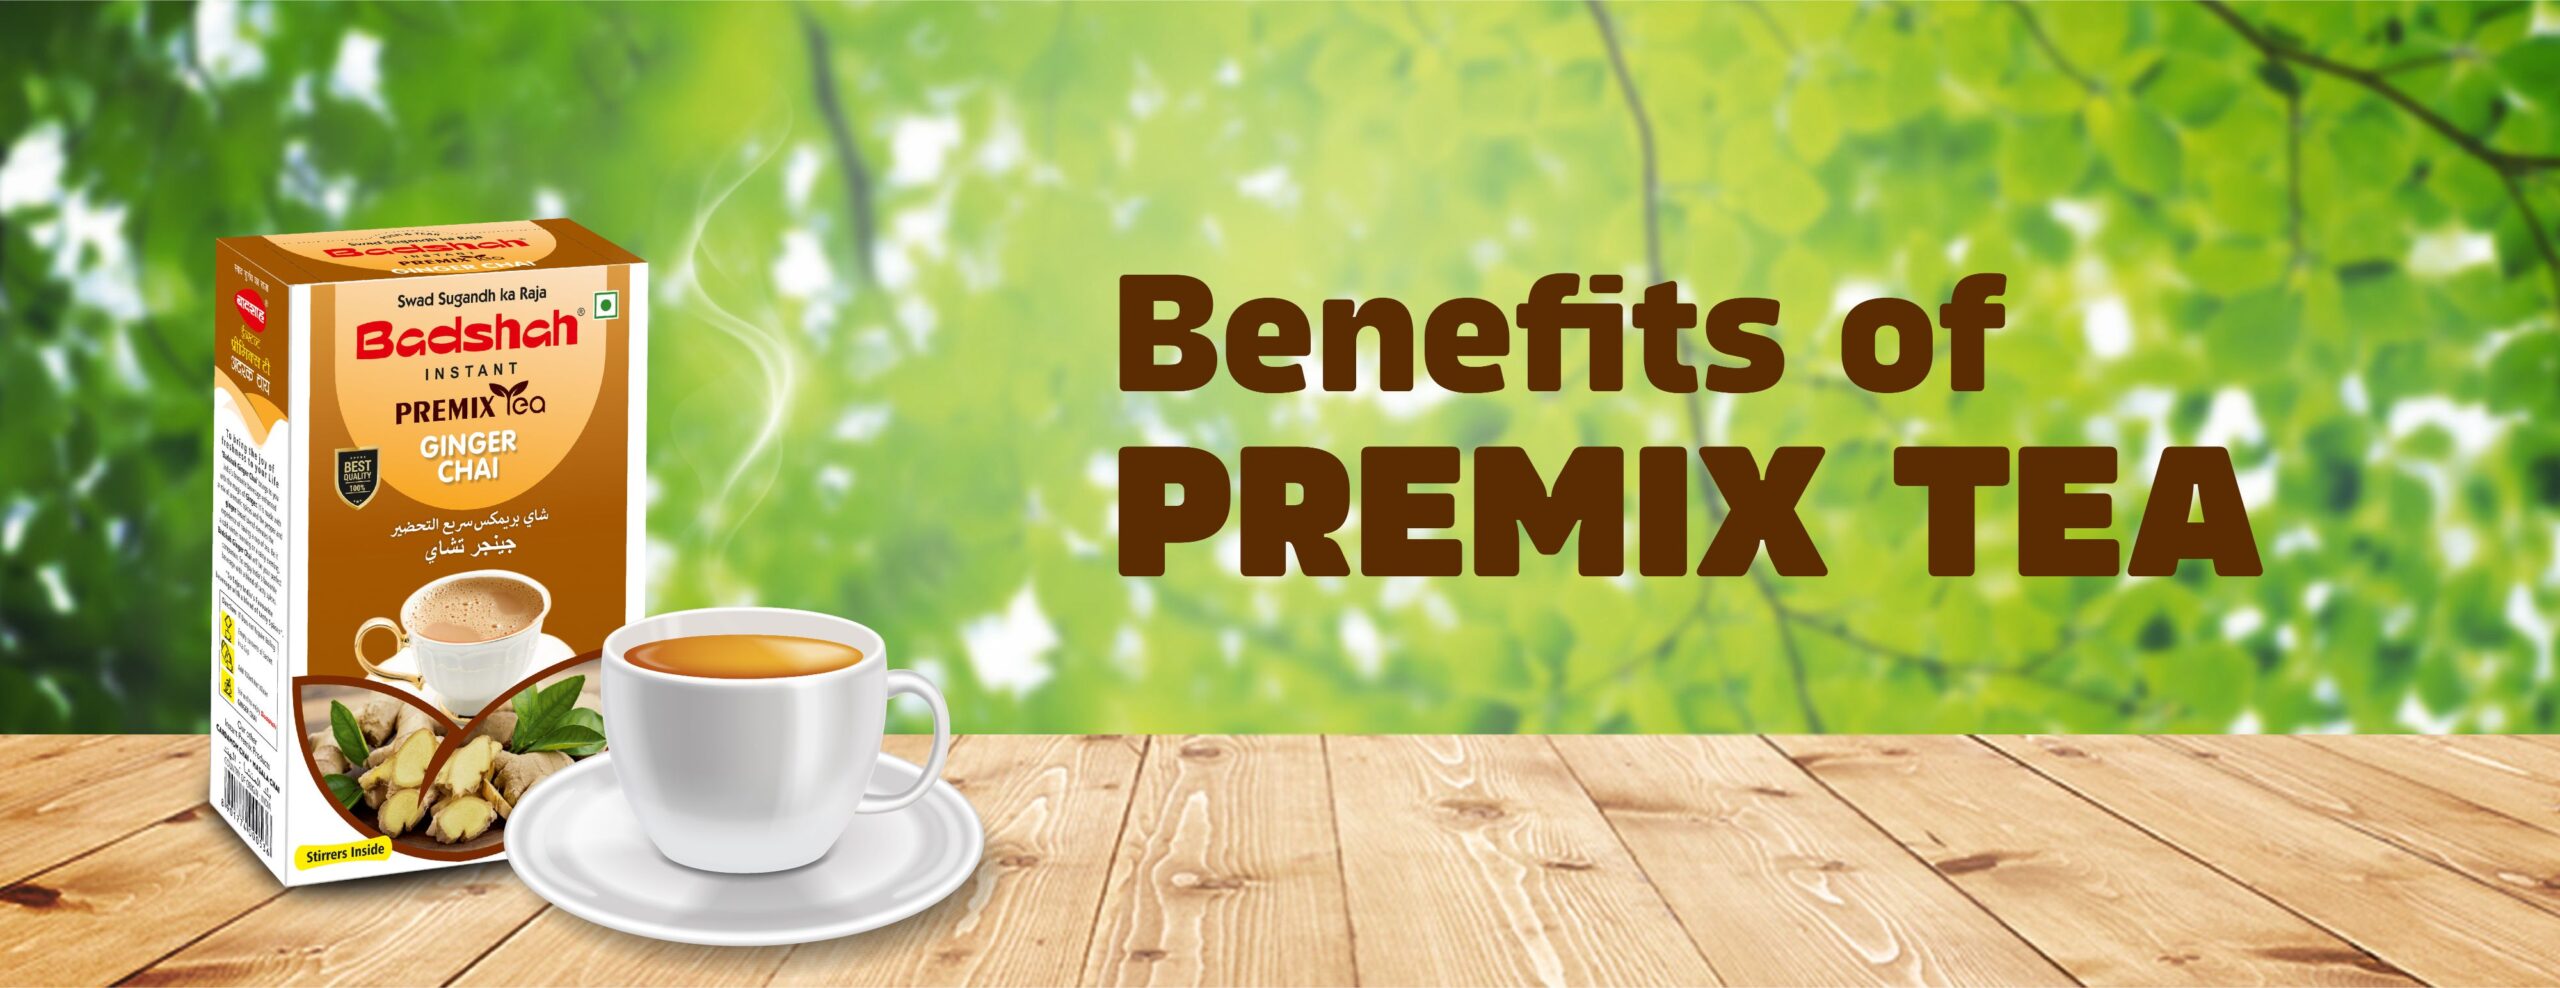 benefits of premix tea